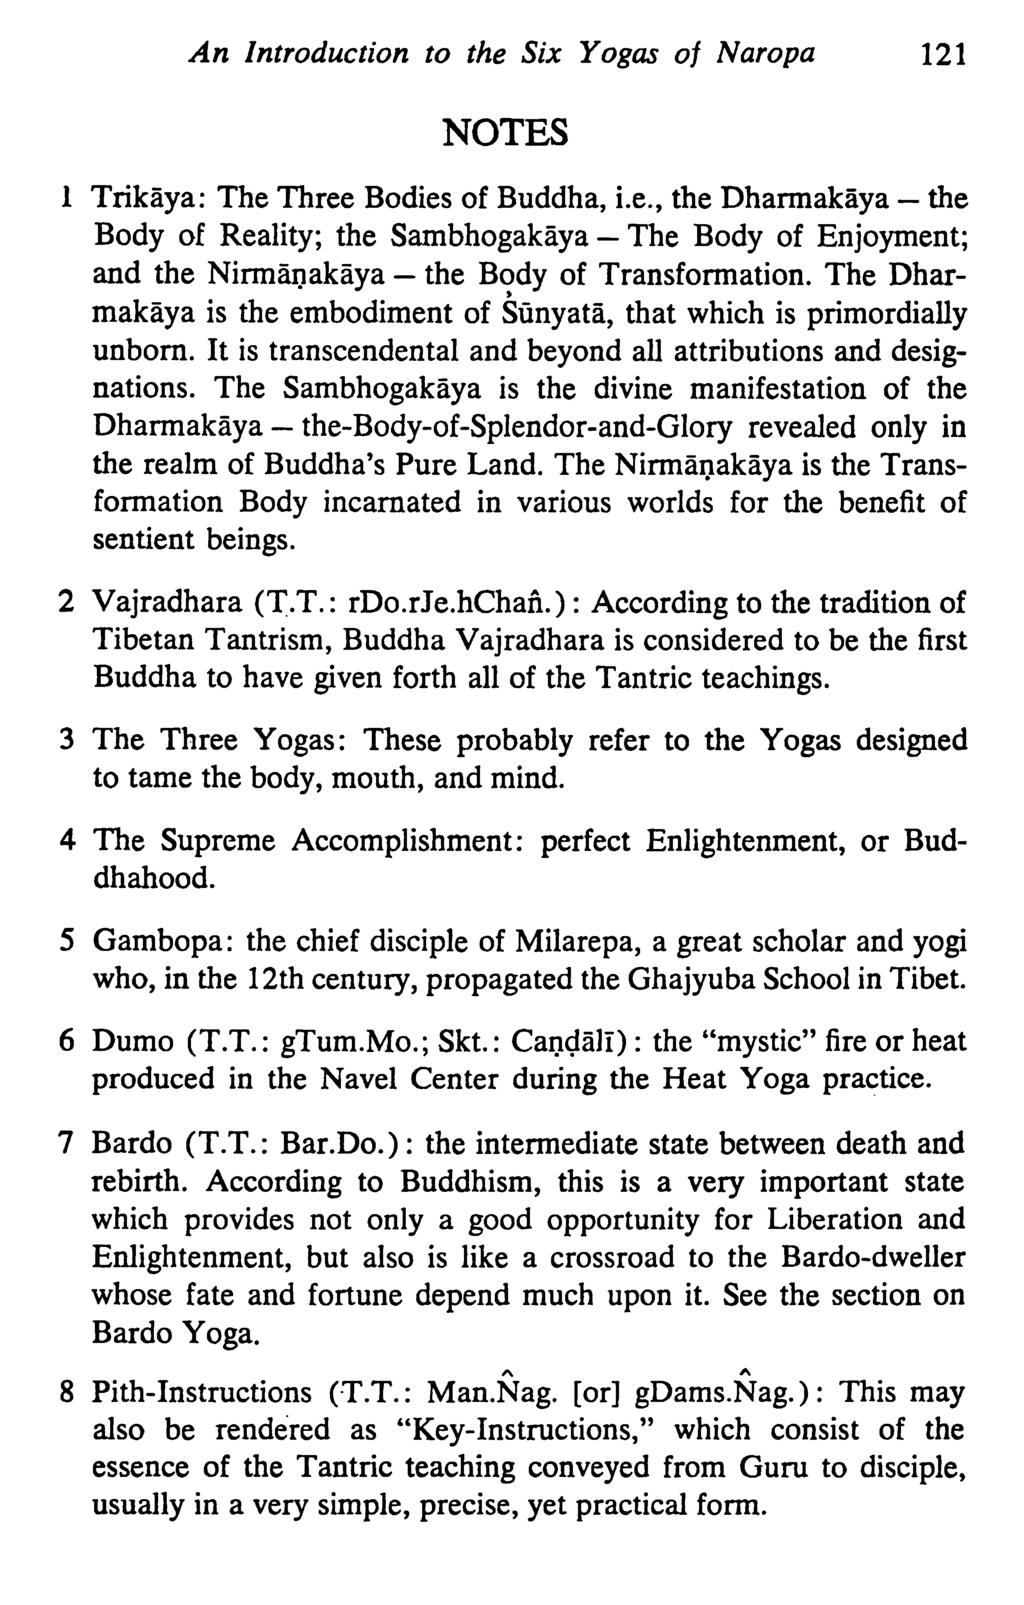 An Introduction to the Six Yogas of Naropa 121 NOTES 1 Trikaya: The Three Bodies of Buddha, i.e., the Dharmakaya- the Body of Reality; the Sambhogakiiya- The Body of Enjoyment; and the Nirmfu)akaya - the Body of Transformation.